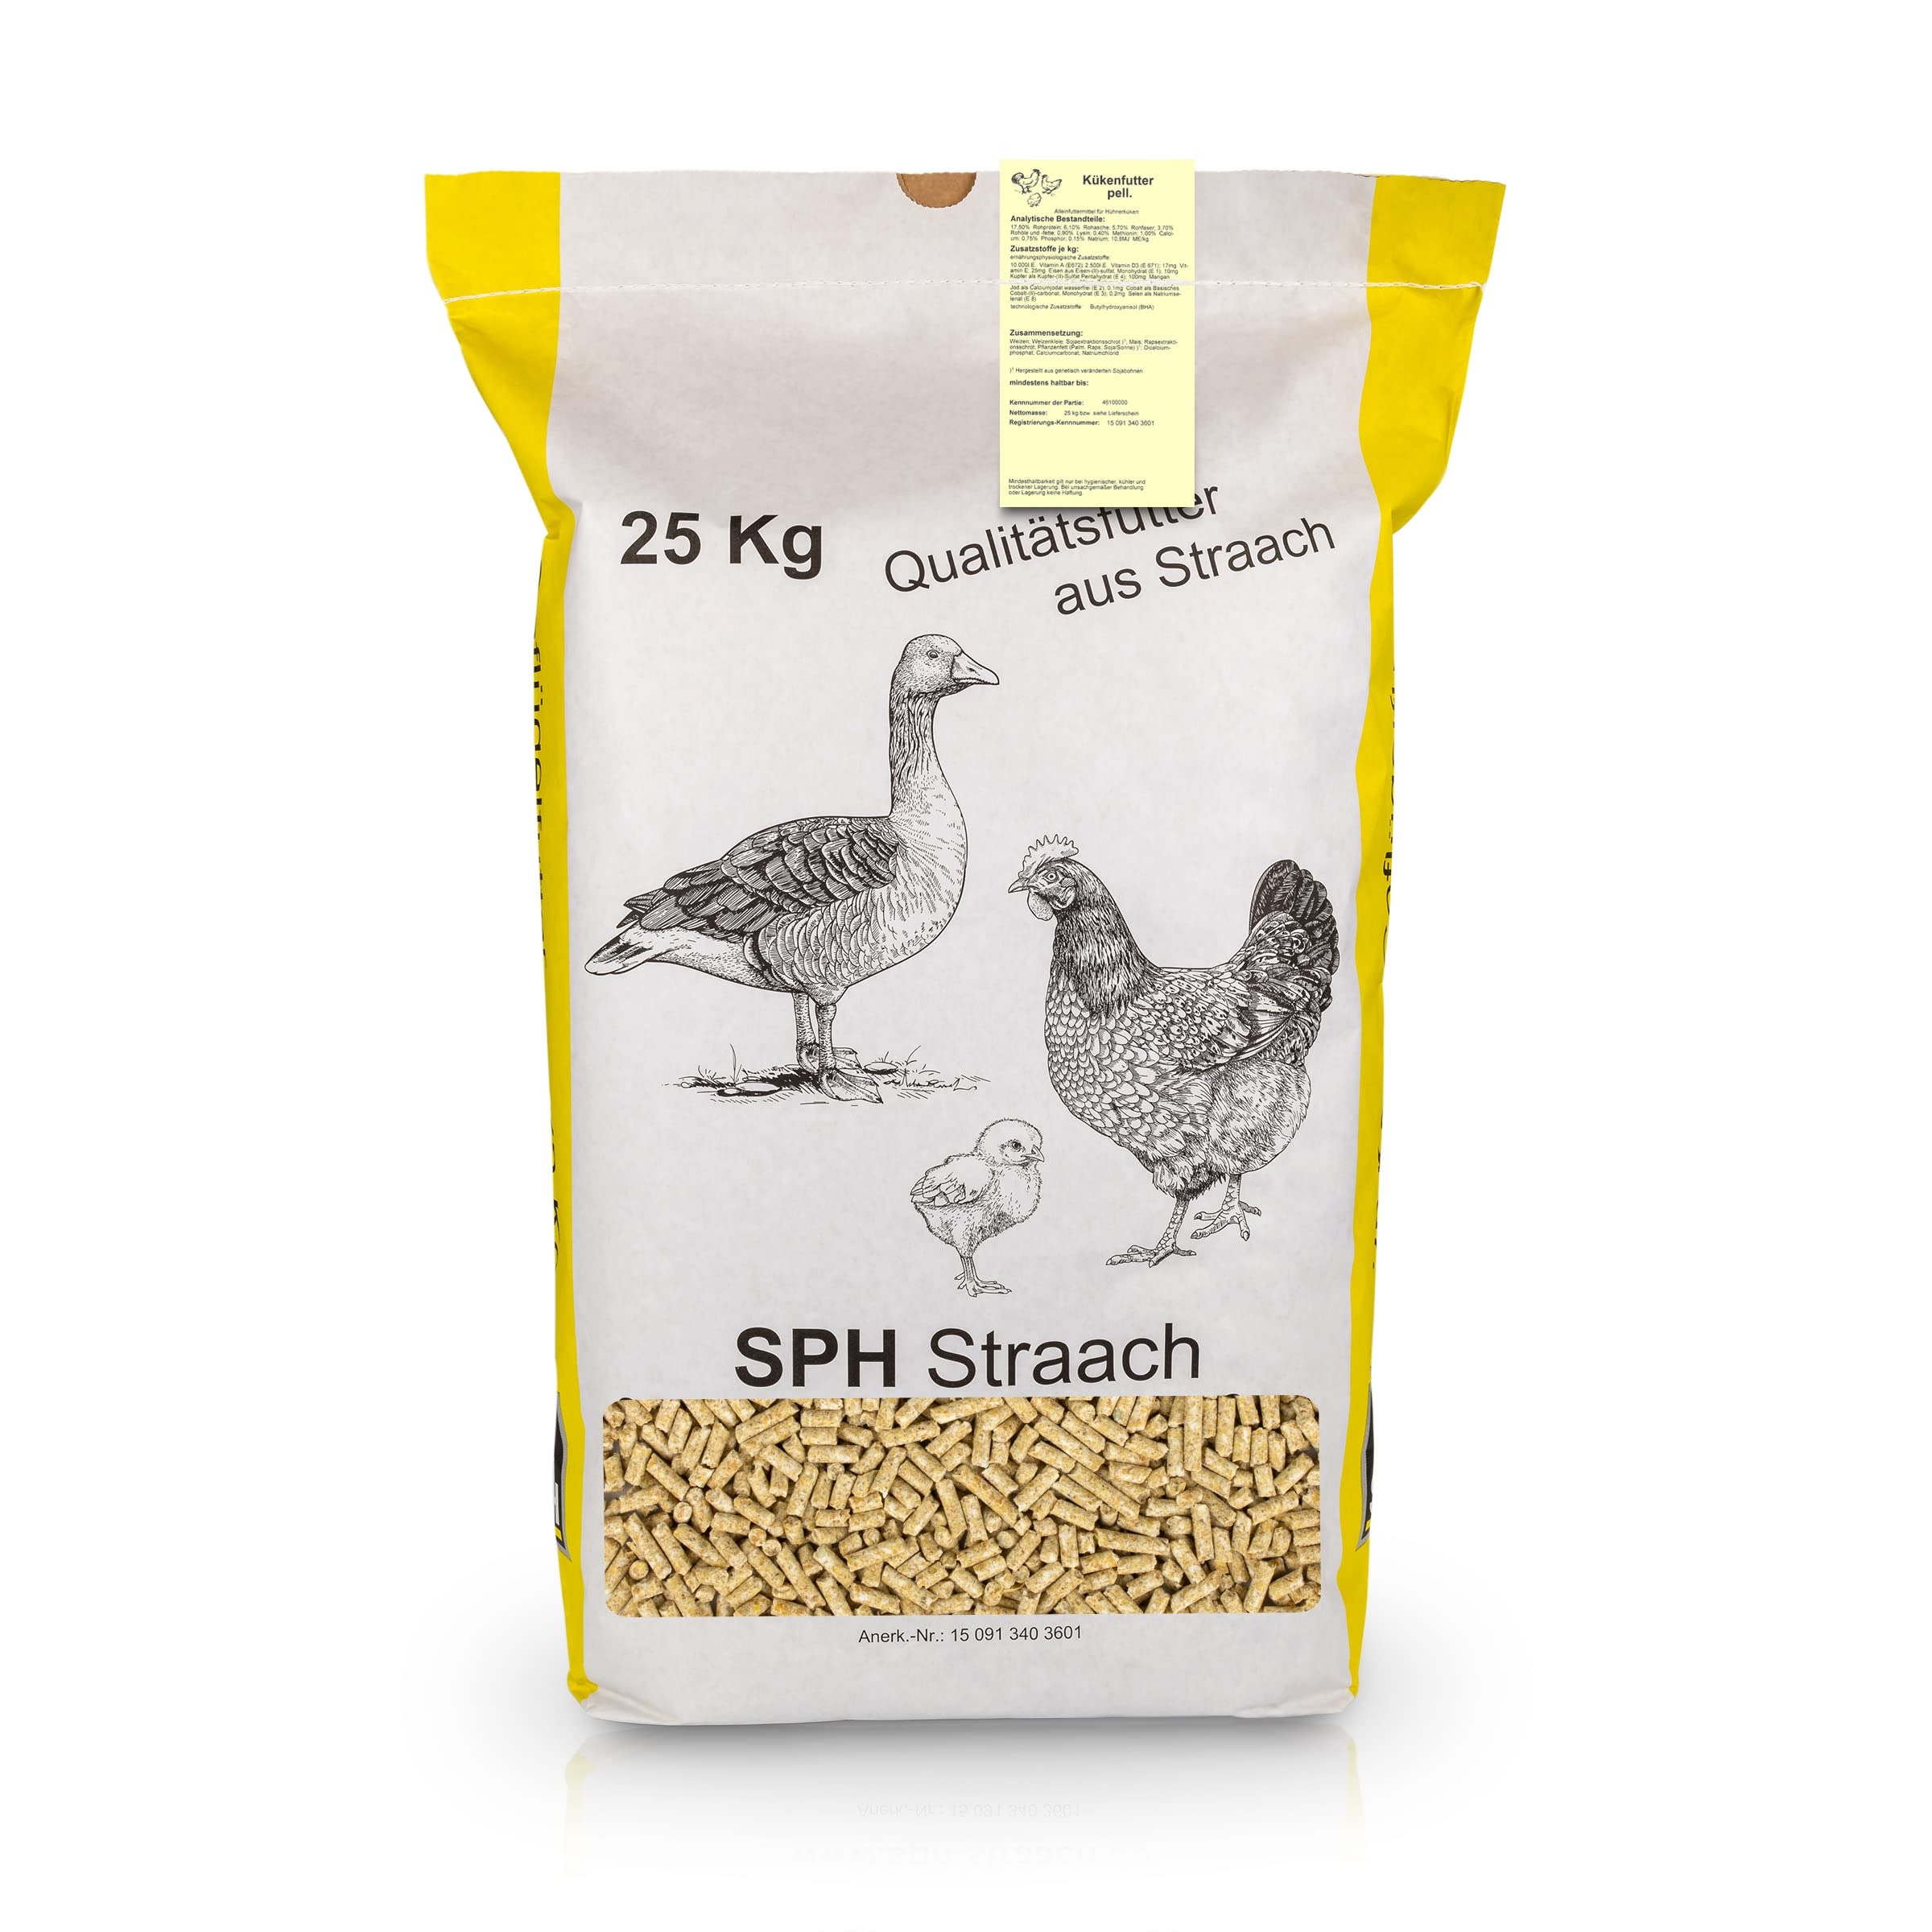 SPH Kükenfutter für Hühnerküken 25 Kg Sack Geflügelfutter Sack - universelles Futter aus regionaler Produktion